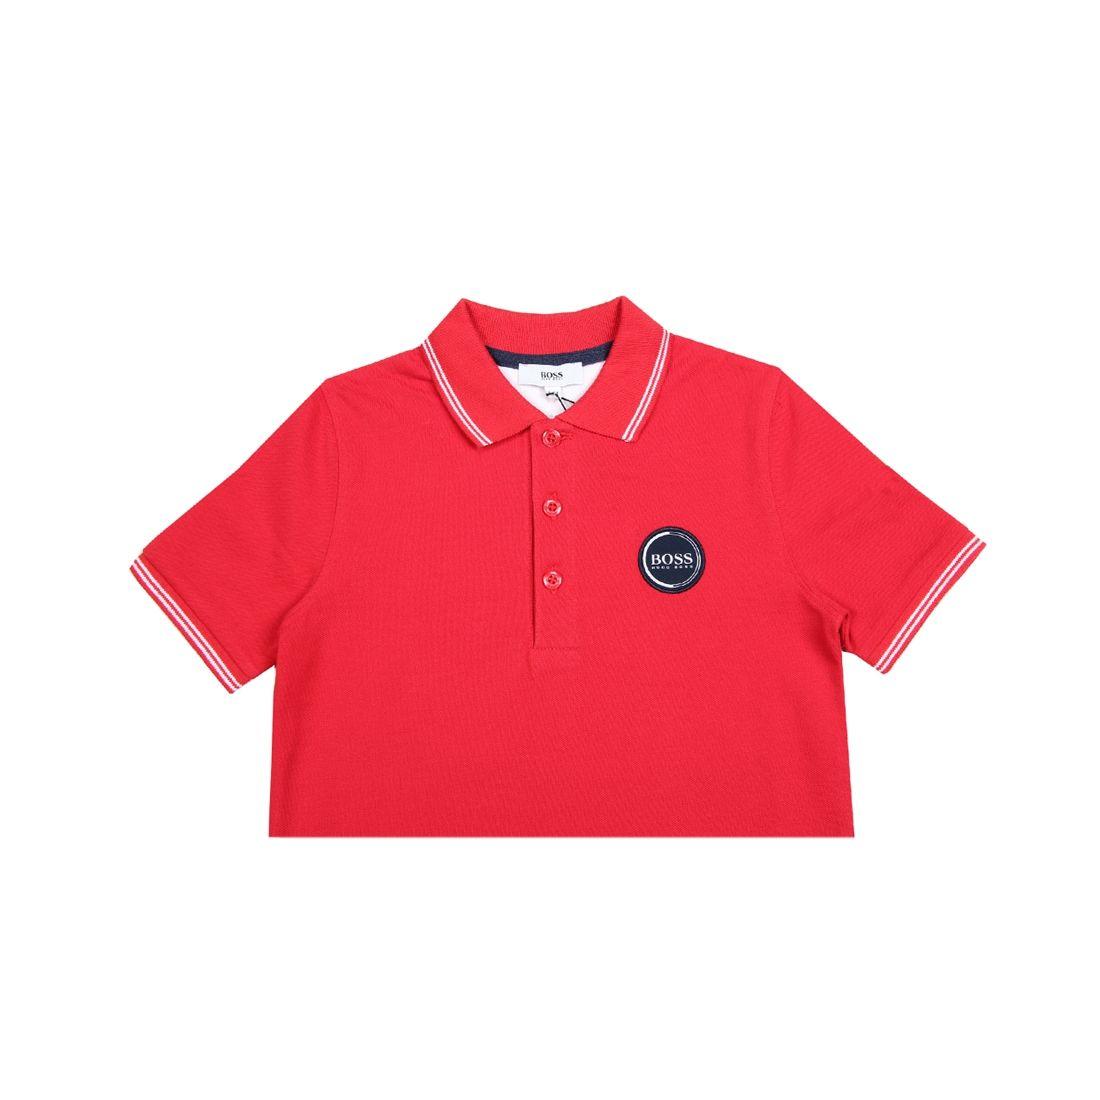 Stripe Red N Logo - Hugo Boss Kids Stripe Detail Red Polo Shirt